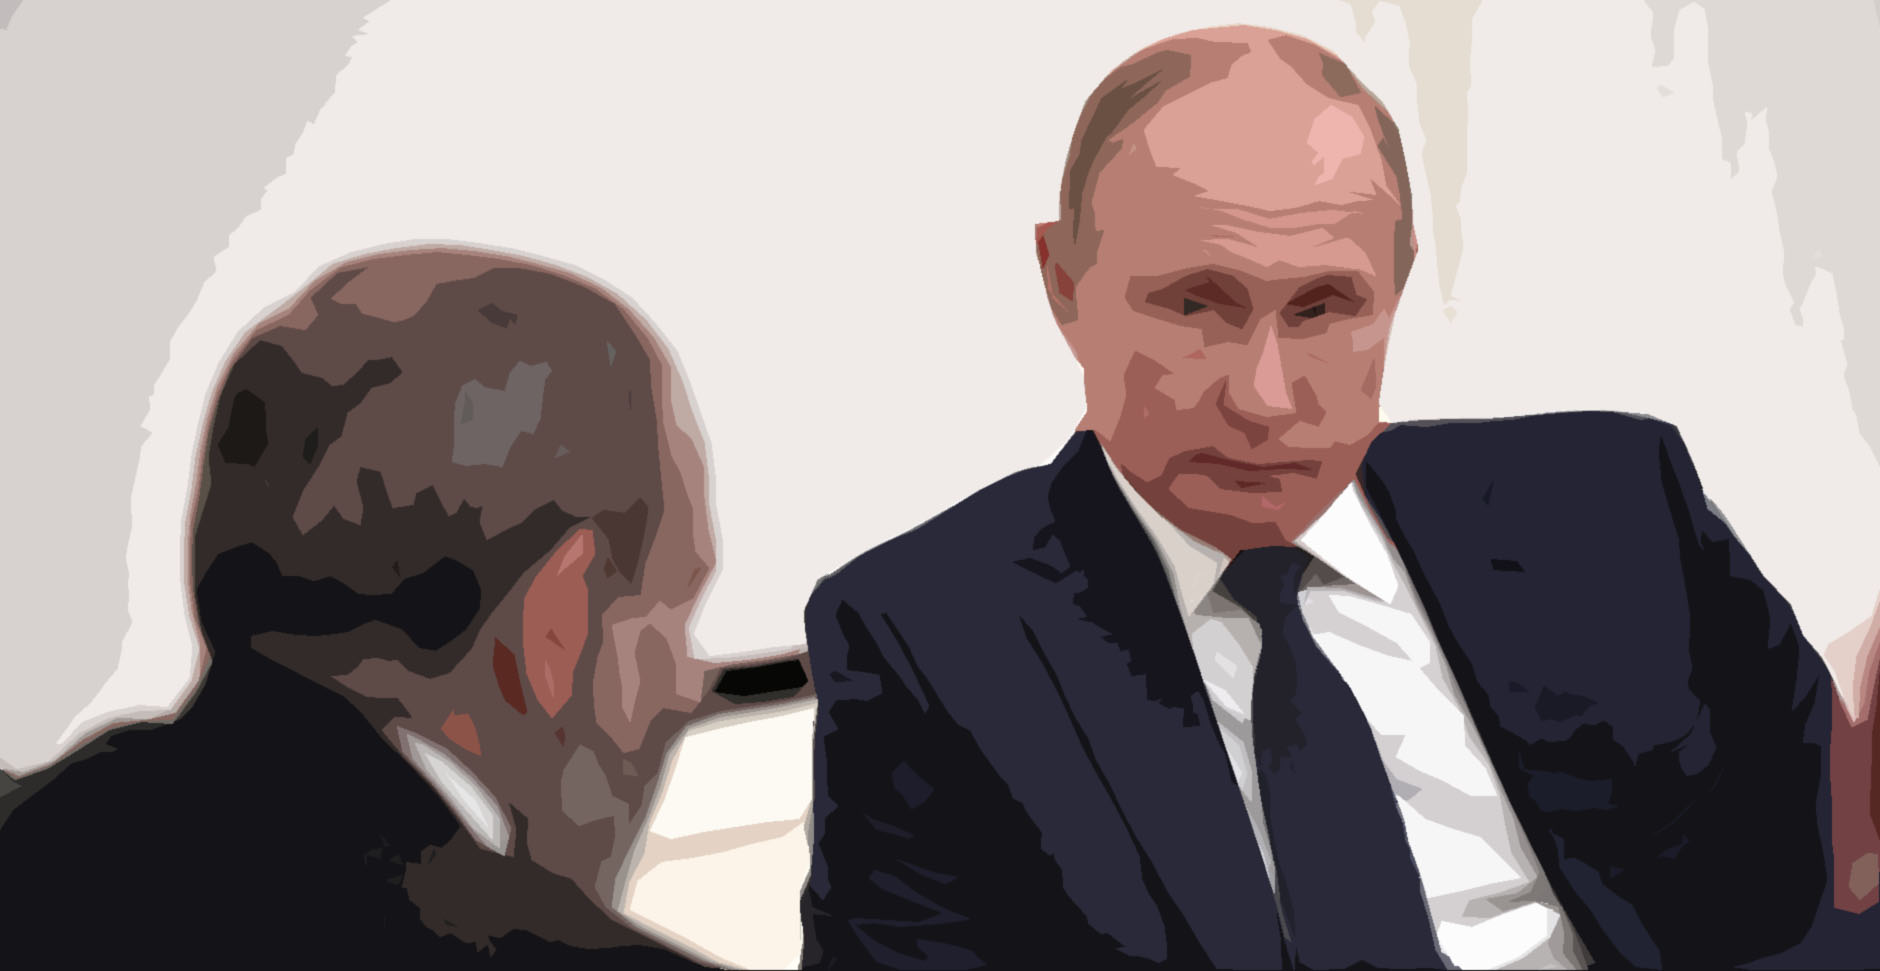 Putin Pashinyan революция революция